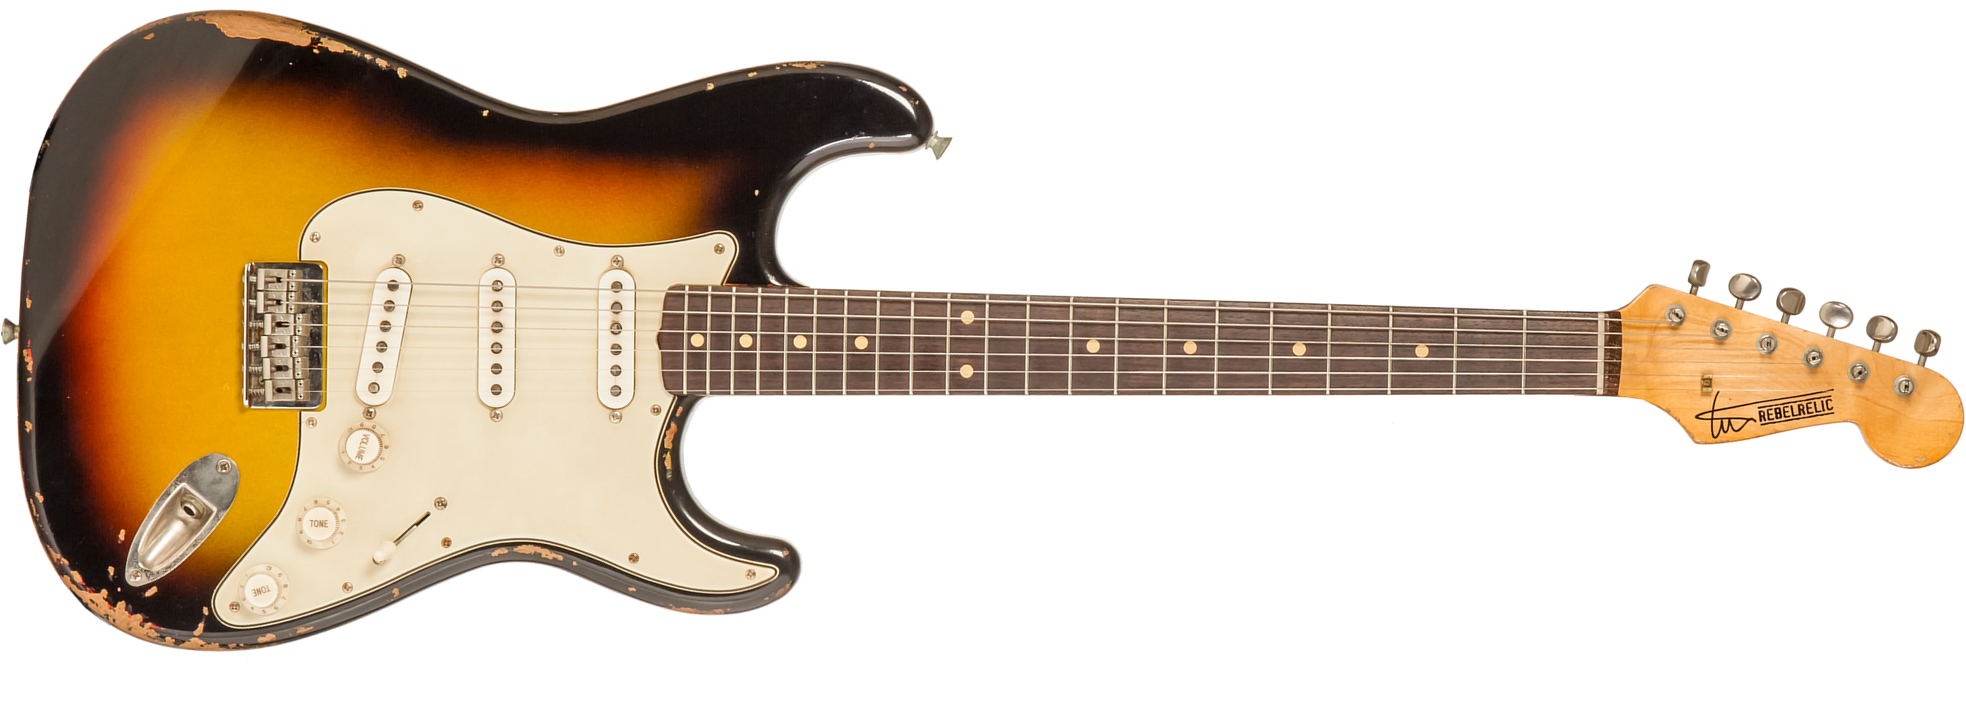 Rebelrelic S-series 1961 Hardtail 3s Ht Rw #231008 - 3-tone Sunburst - Guitarra eléctrica con forma de str. - Main picture